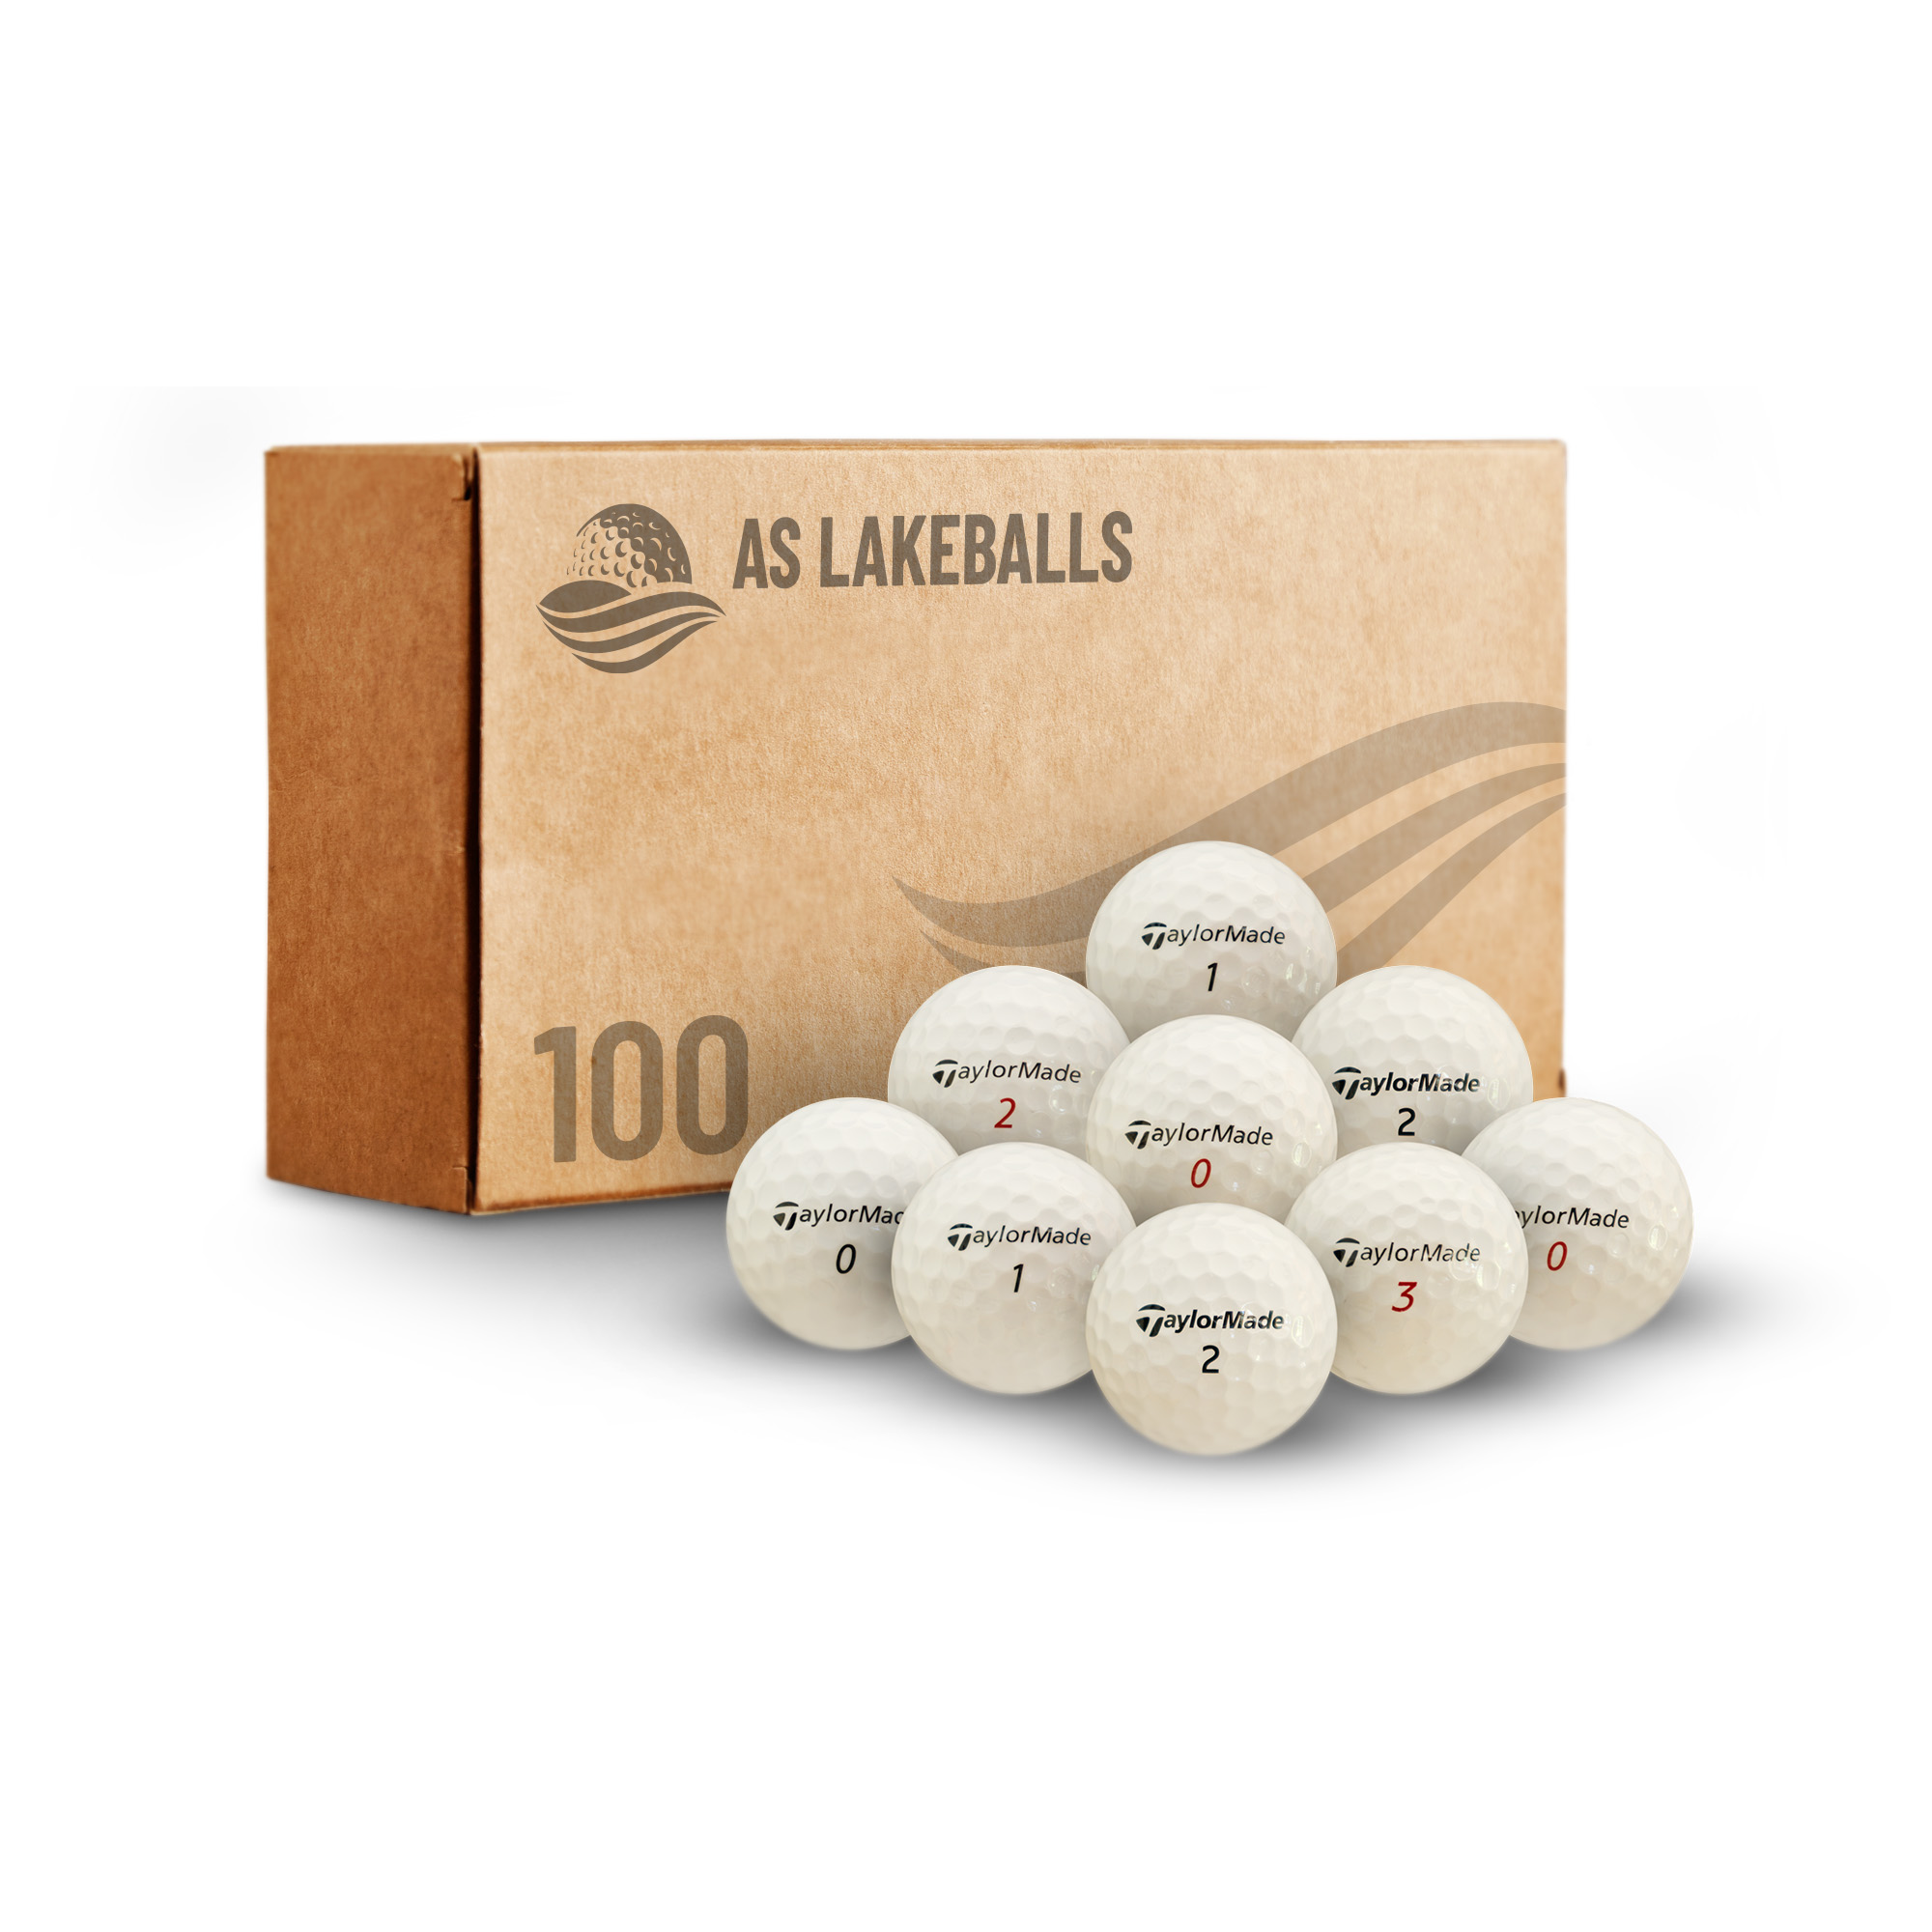 100 Stück Taylor Made Mix AAAA Lakeballs bei AS Lakeballs günstig kaufen